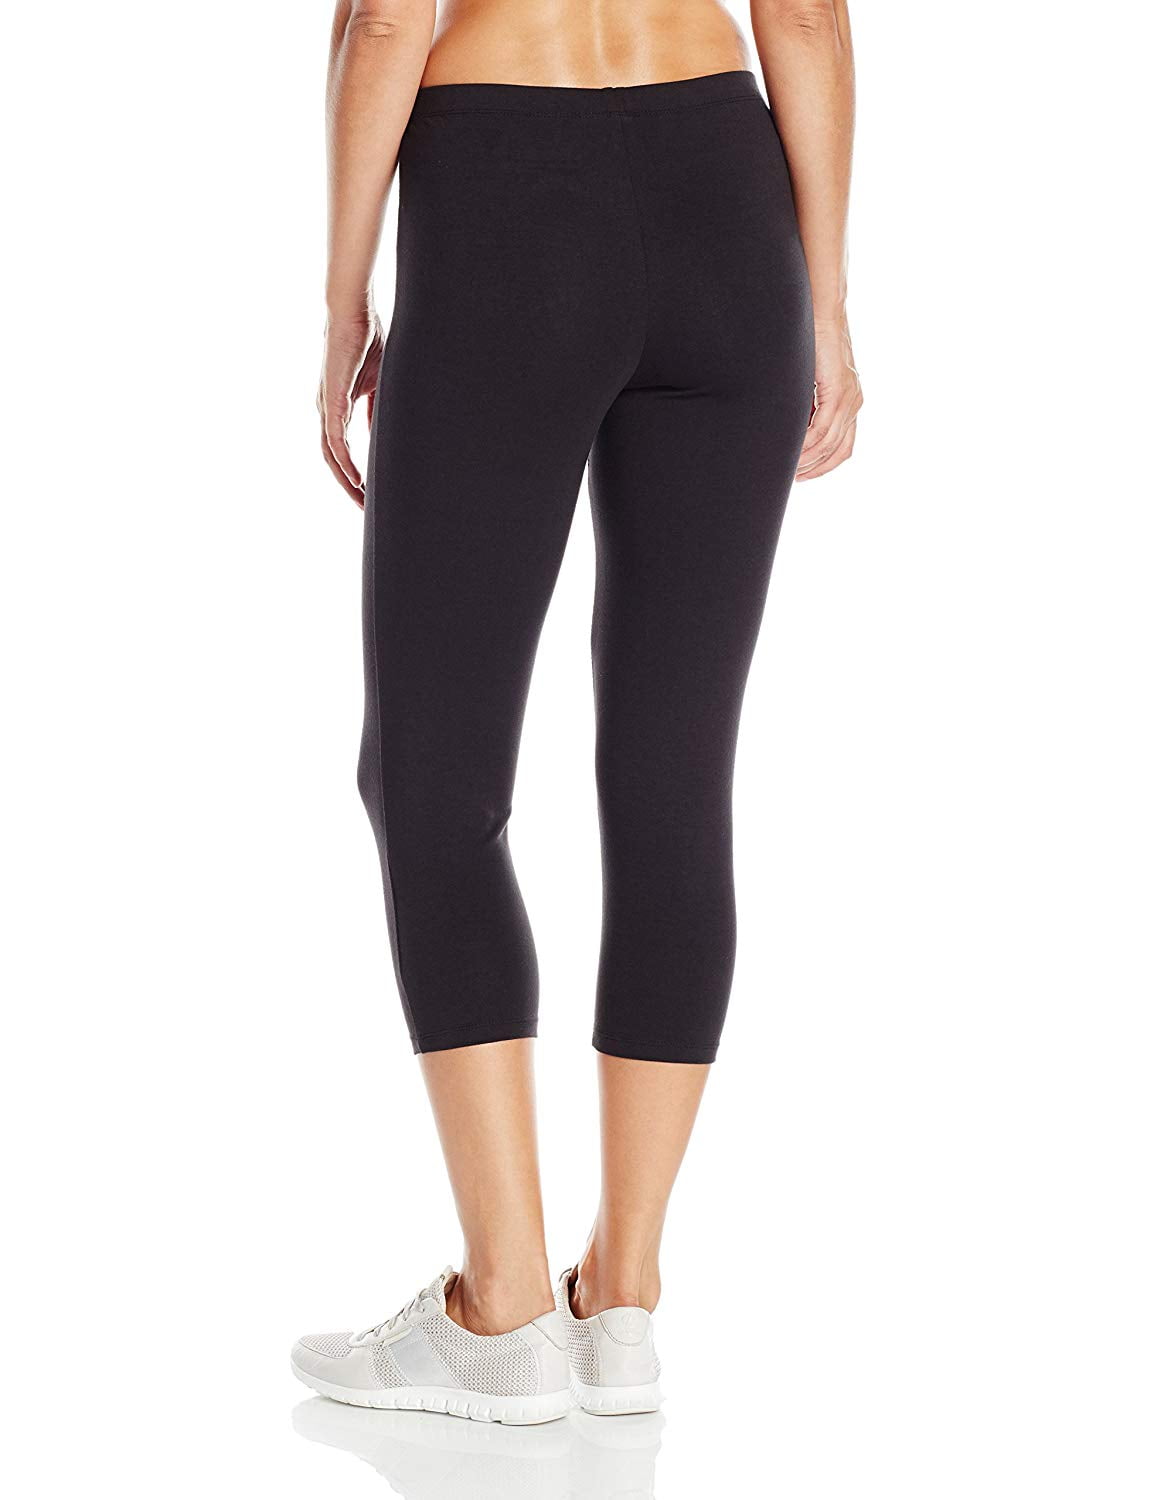 Hanes Women's Stretch Jersey Capri, Black, Medium | Walmart Canada